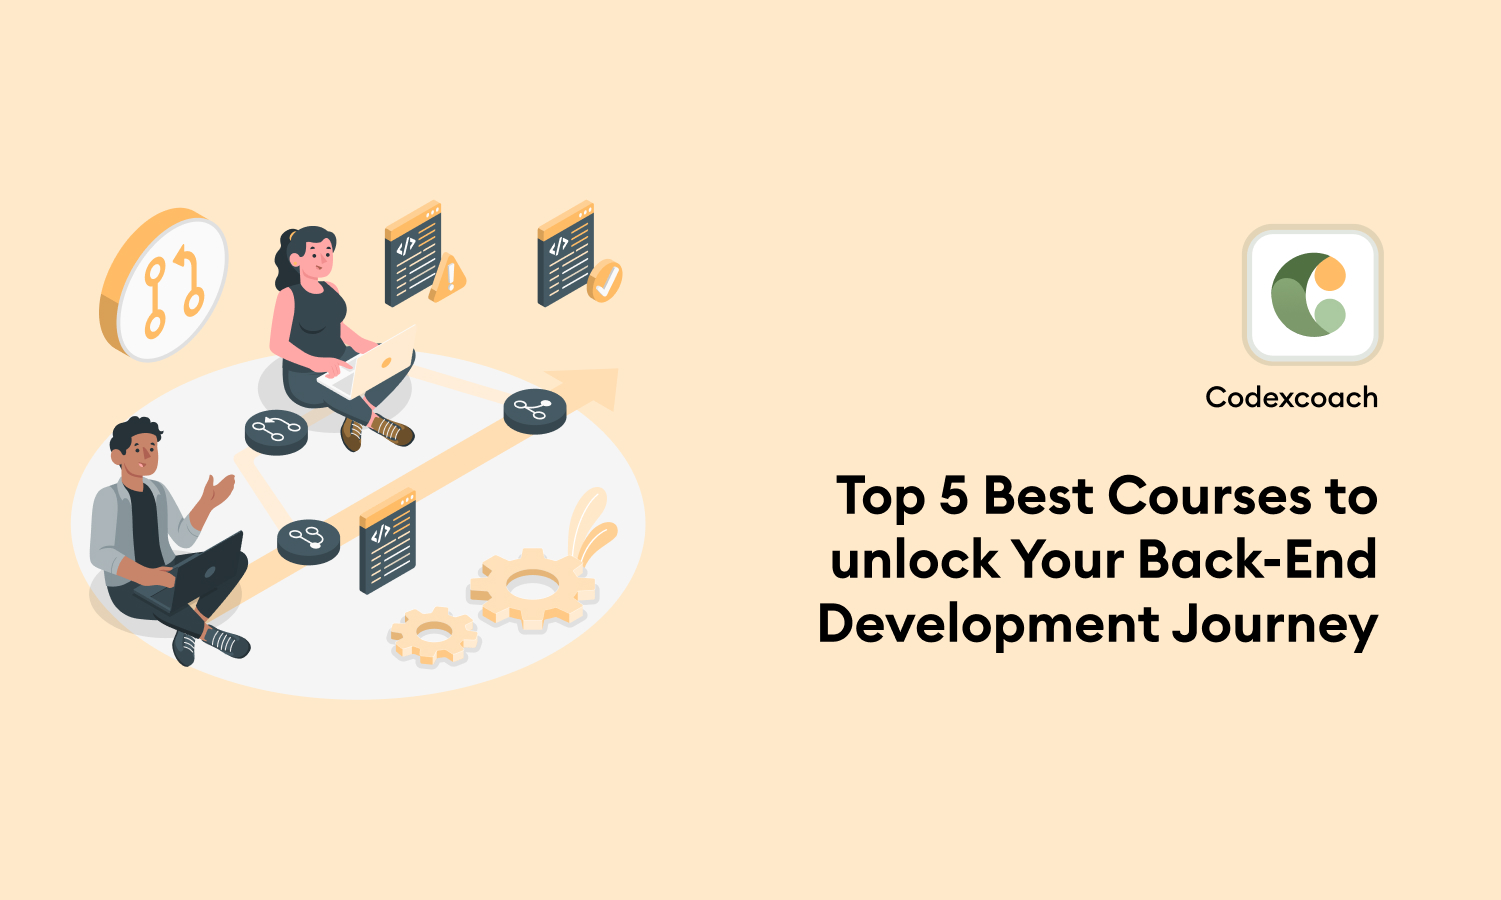 Top 5 Best Courses to unlock Your Back-End Development Journey